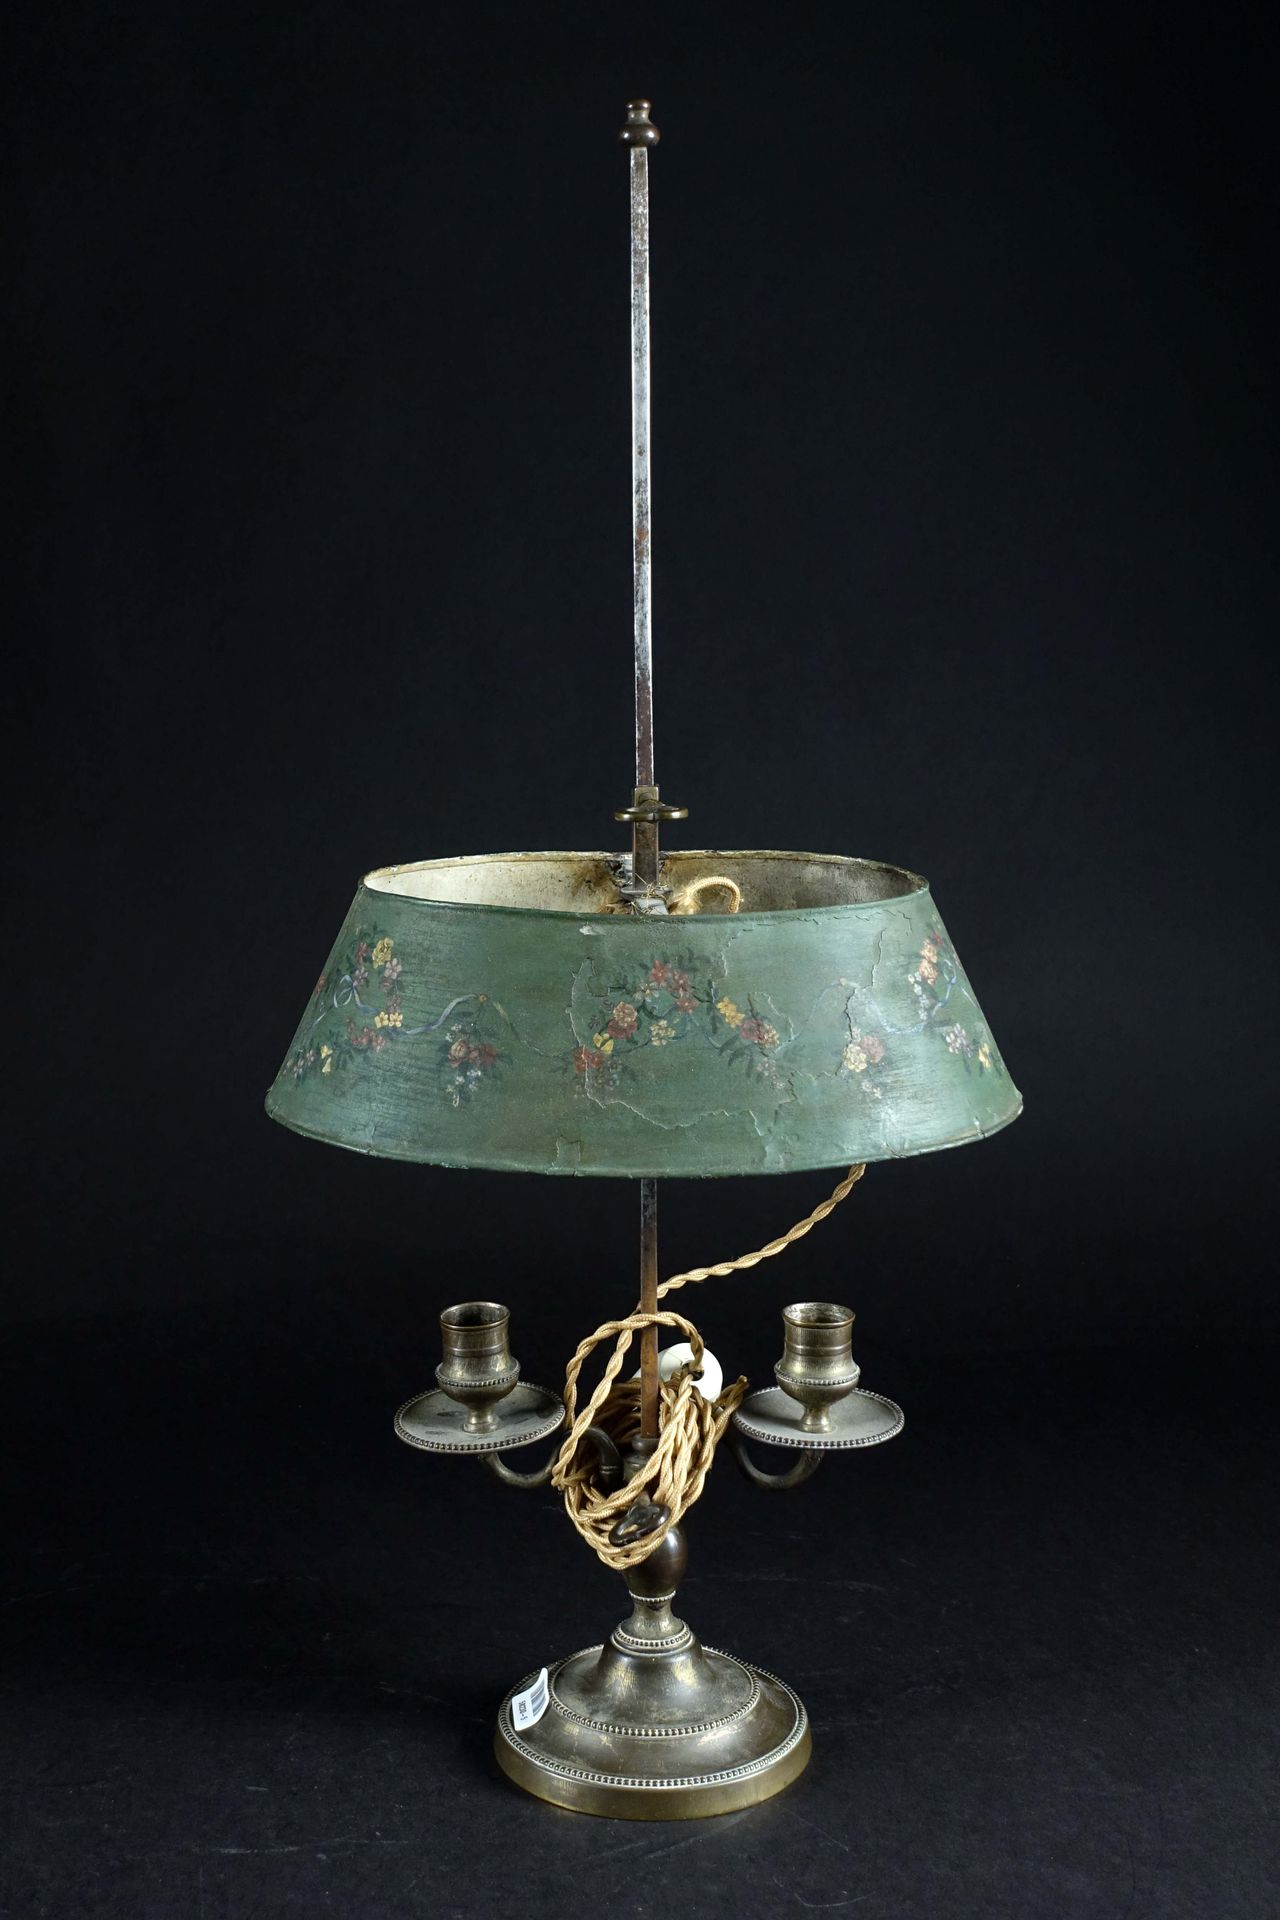 D’époque Louis XVI. Piccola lampada ad acqua calda, a due luci, sormontata da un&hellip;